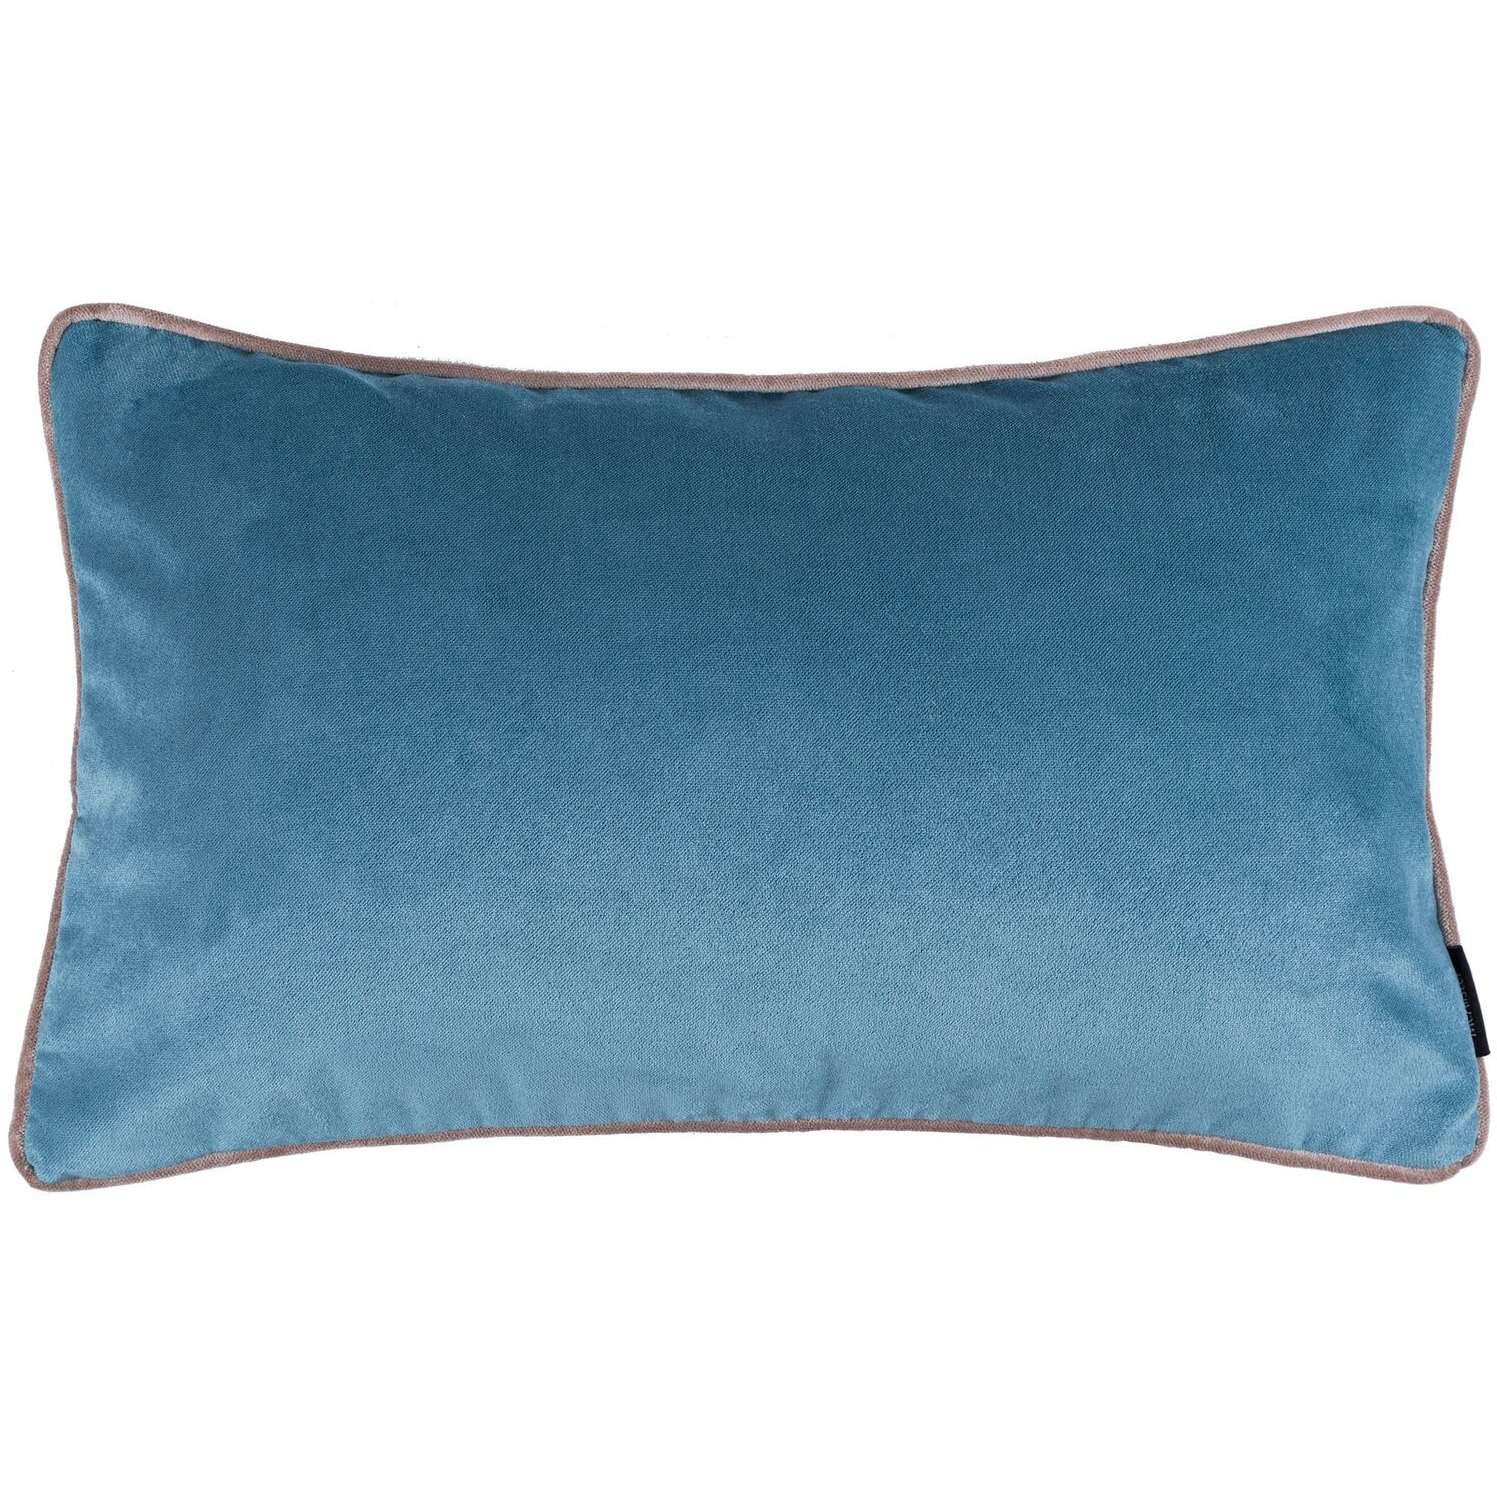 McAlister Textiles Matt Duck Egg Blue Piped Velvet Pillow Pillow Cover Only 50cm x 30cm 